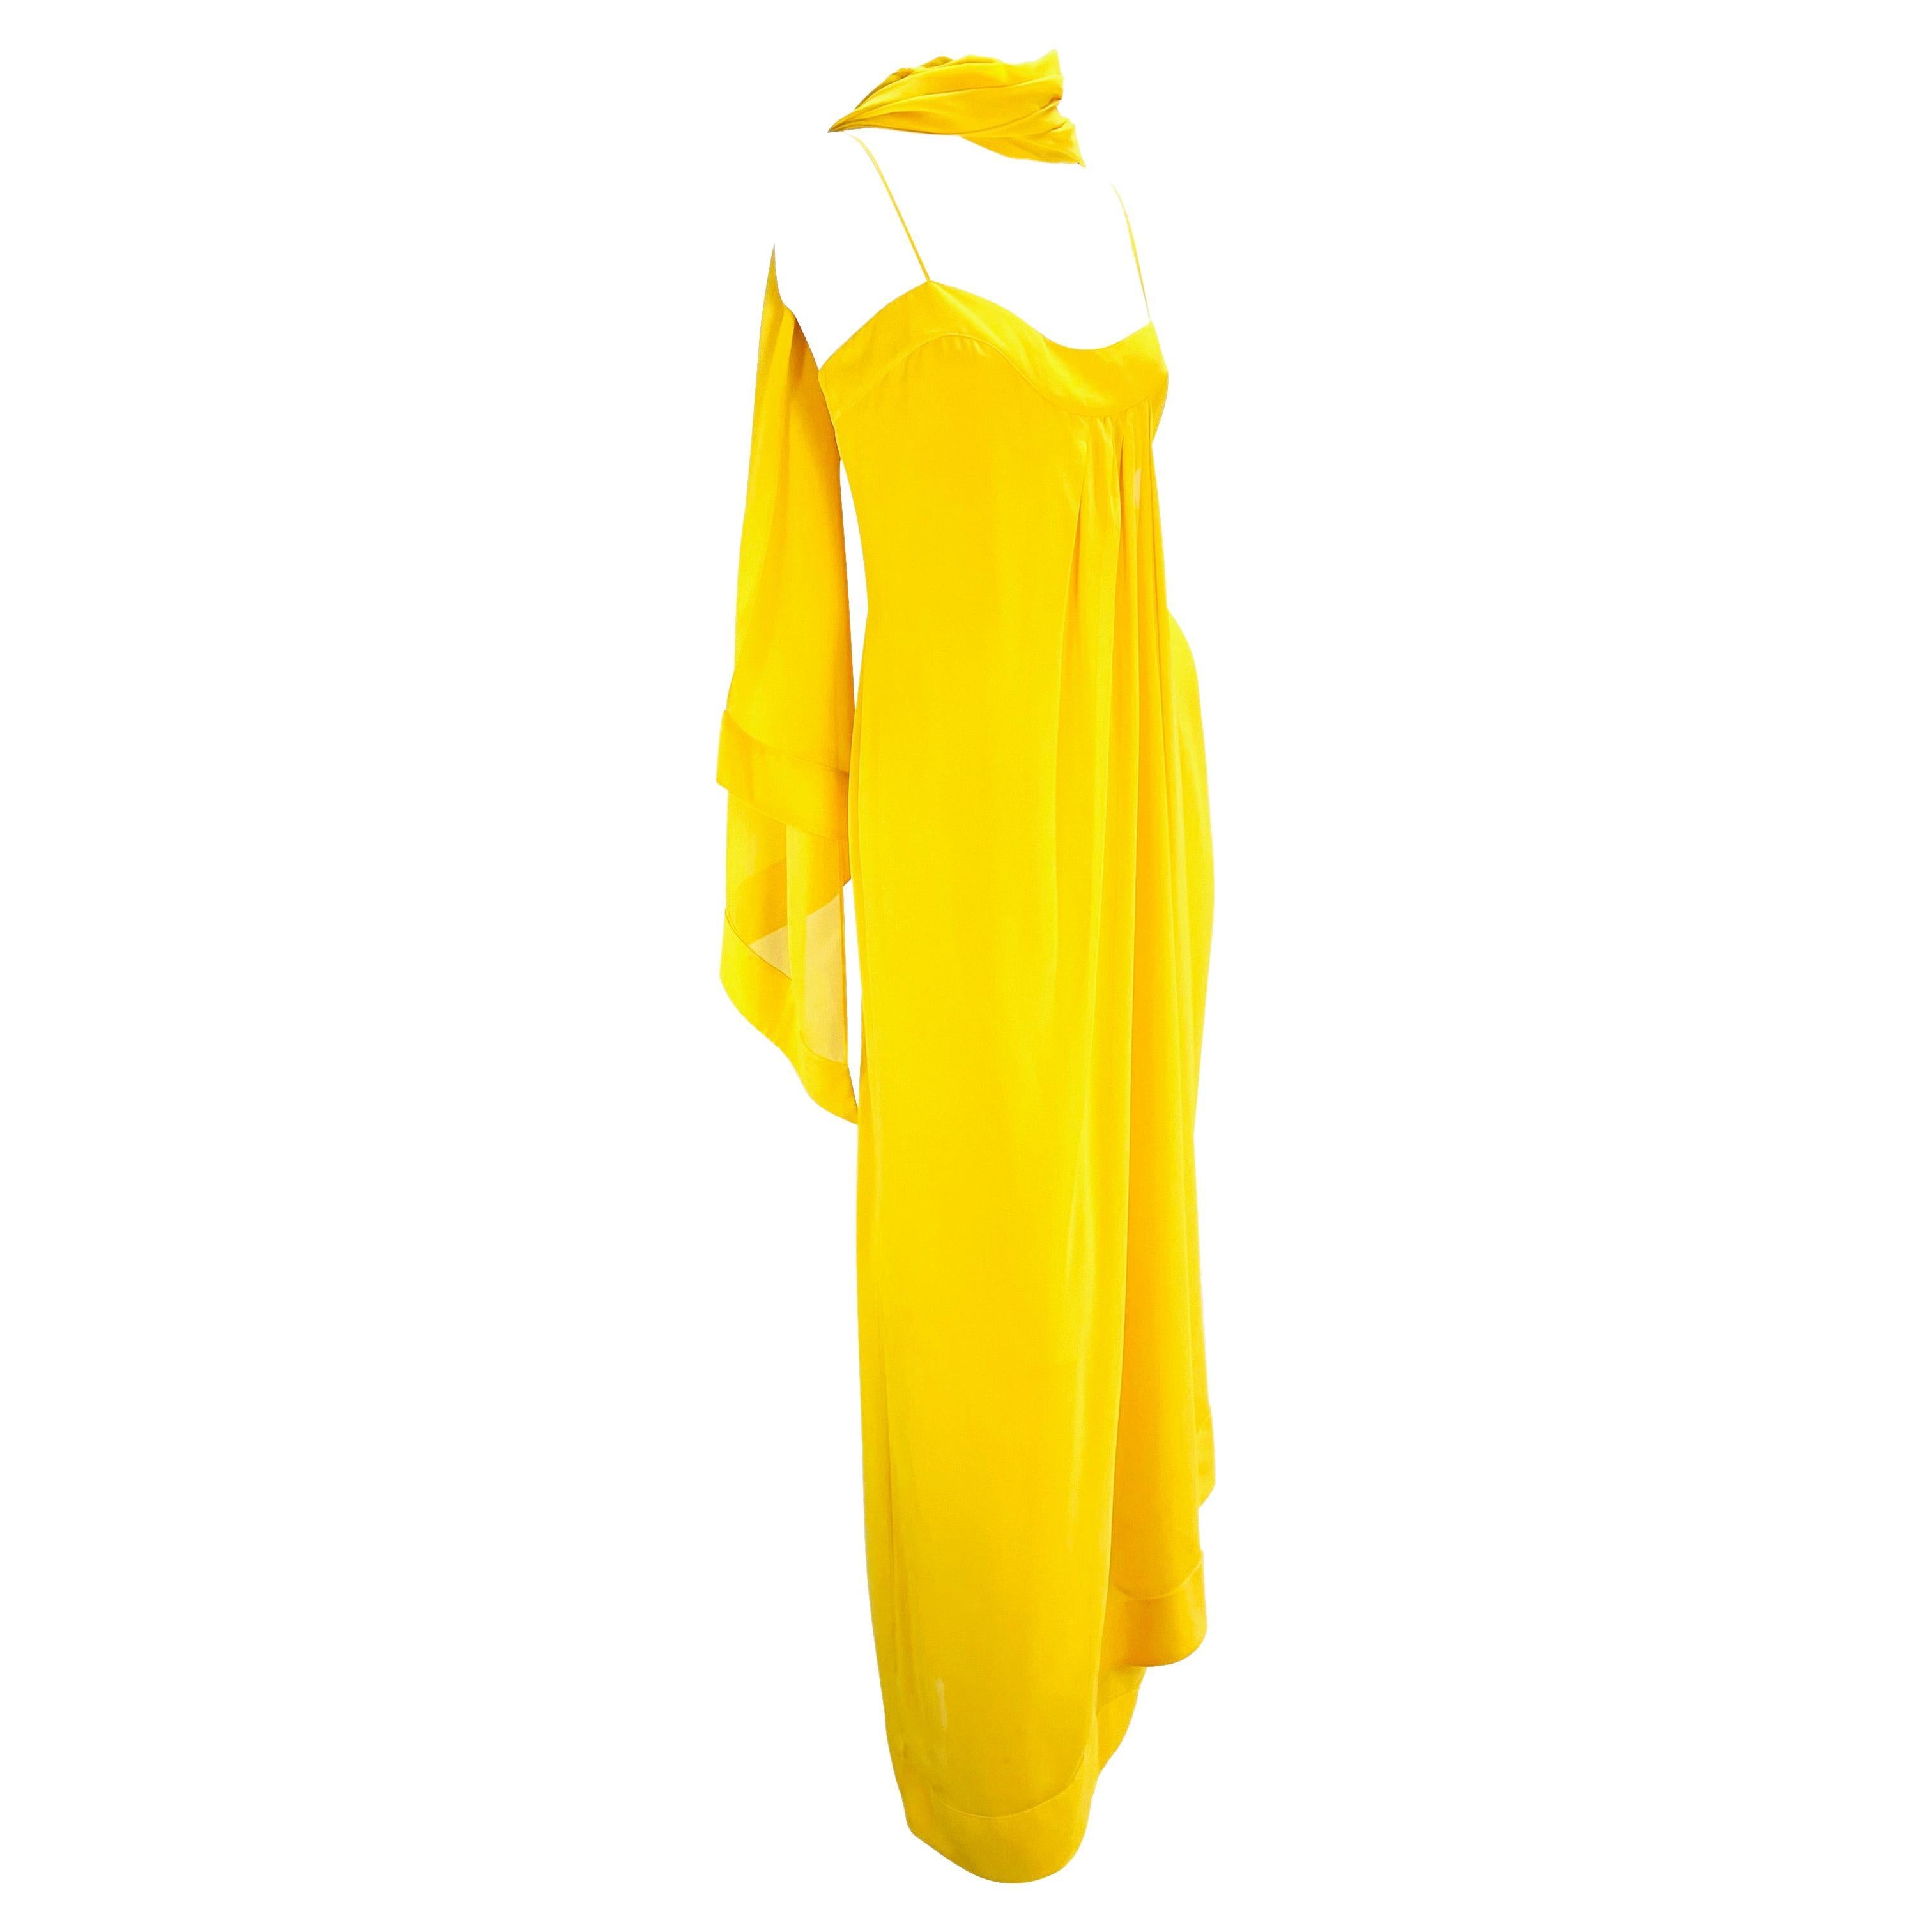 S/S 2000 Thierry Mugler Canary Yellow Chiffon Dress with Matching Shawl For Sale 7